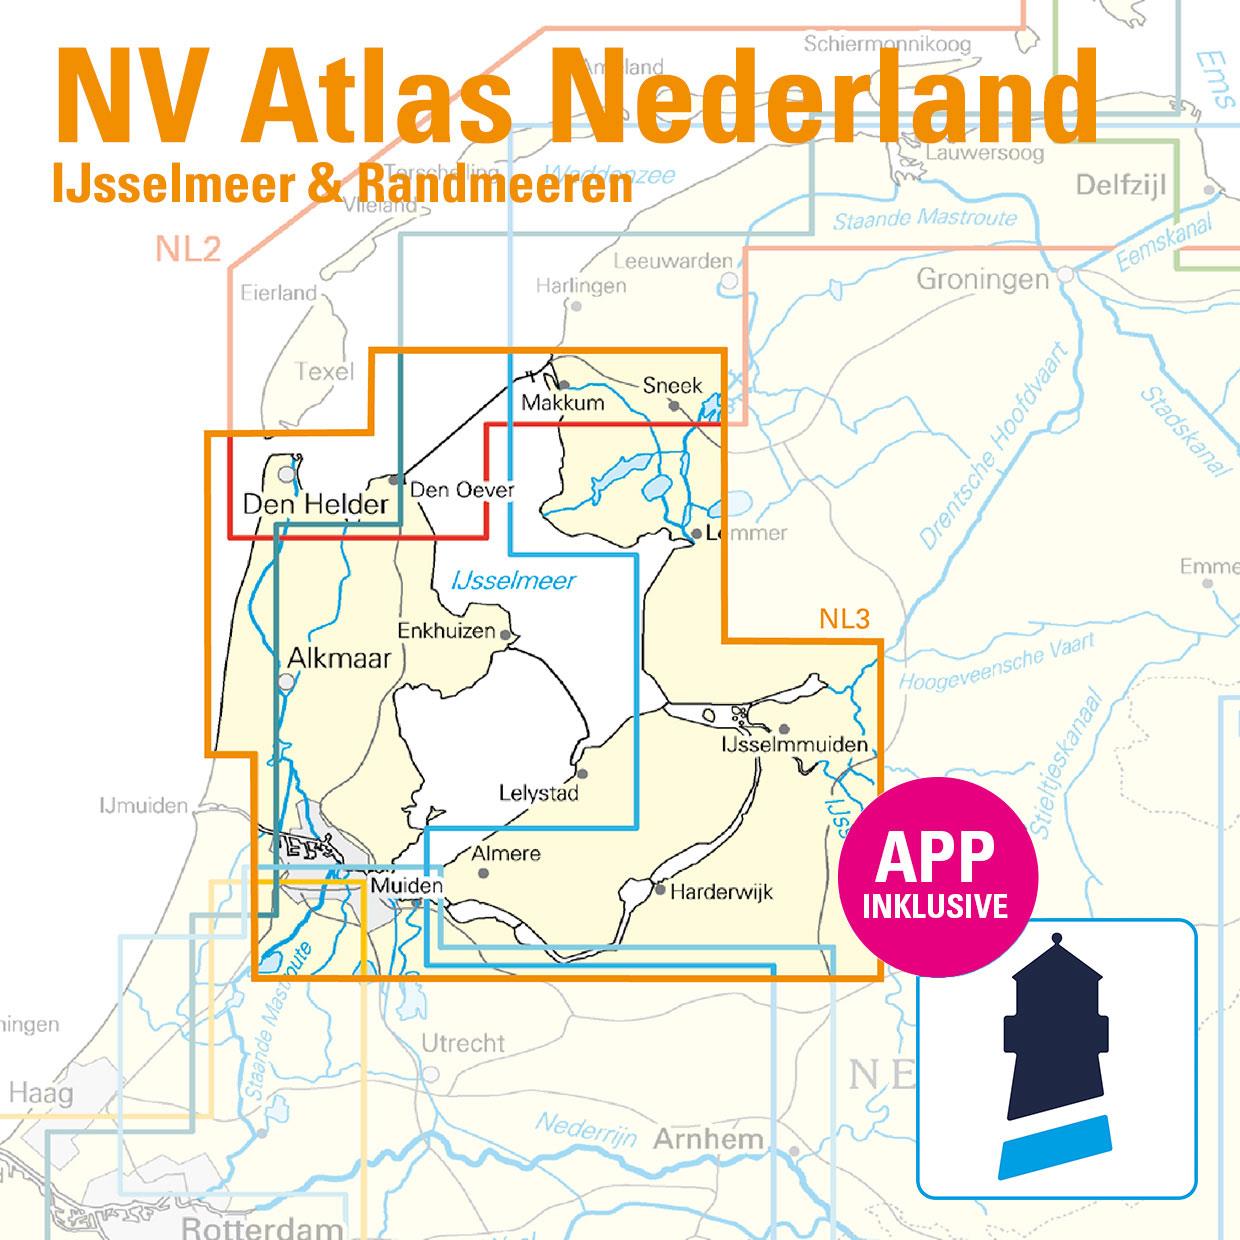 NV Charts Nederland NL3 - IJsselmeer & Randmeeren